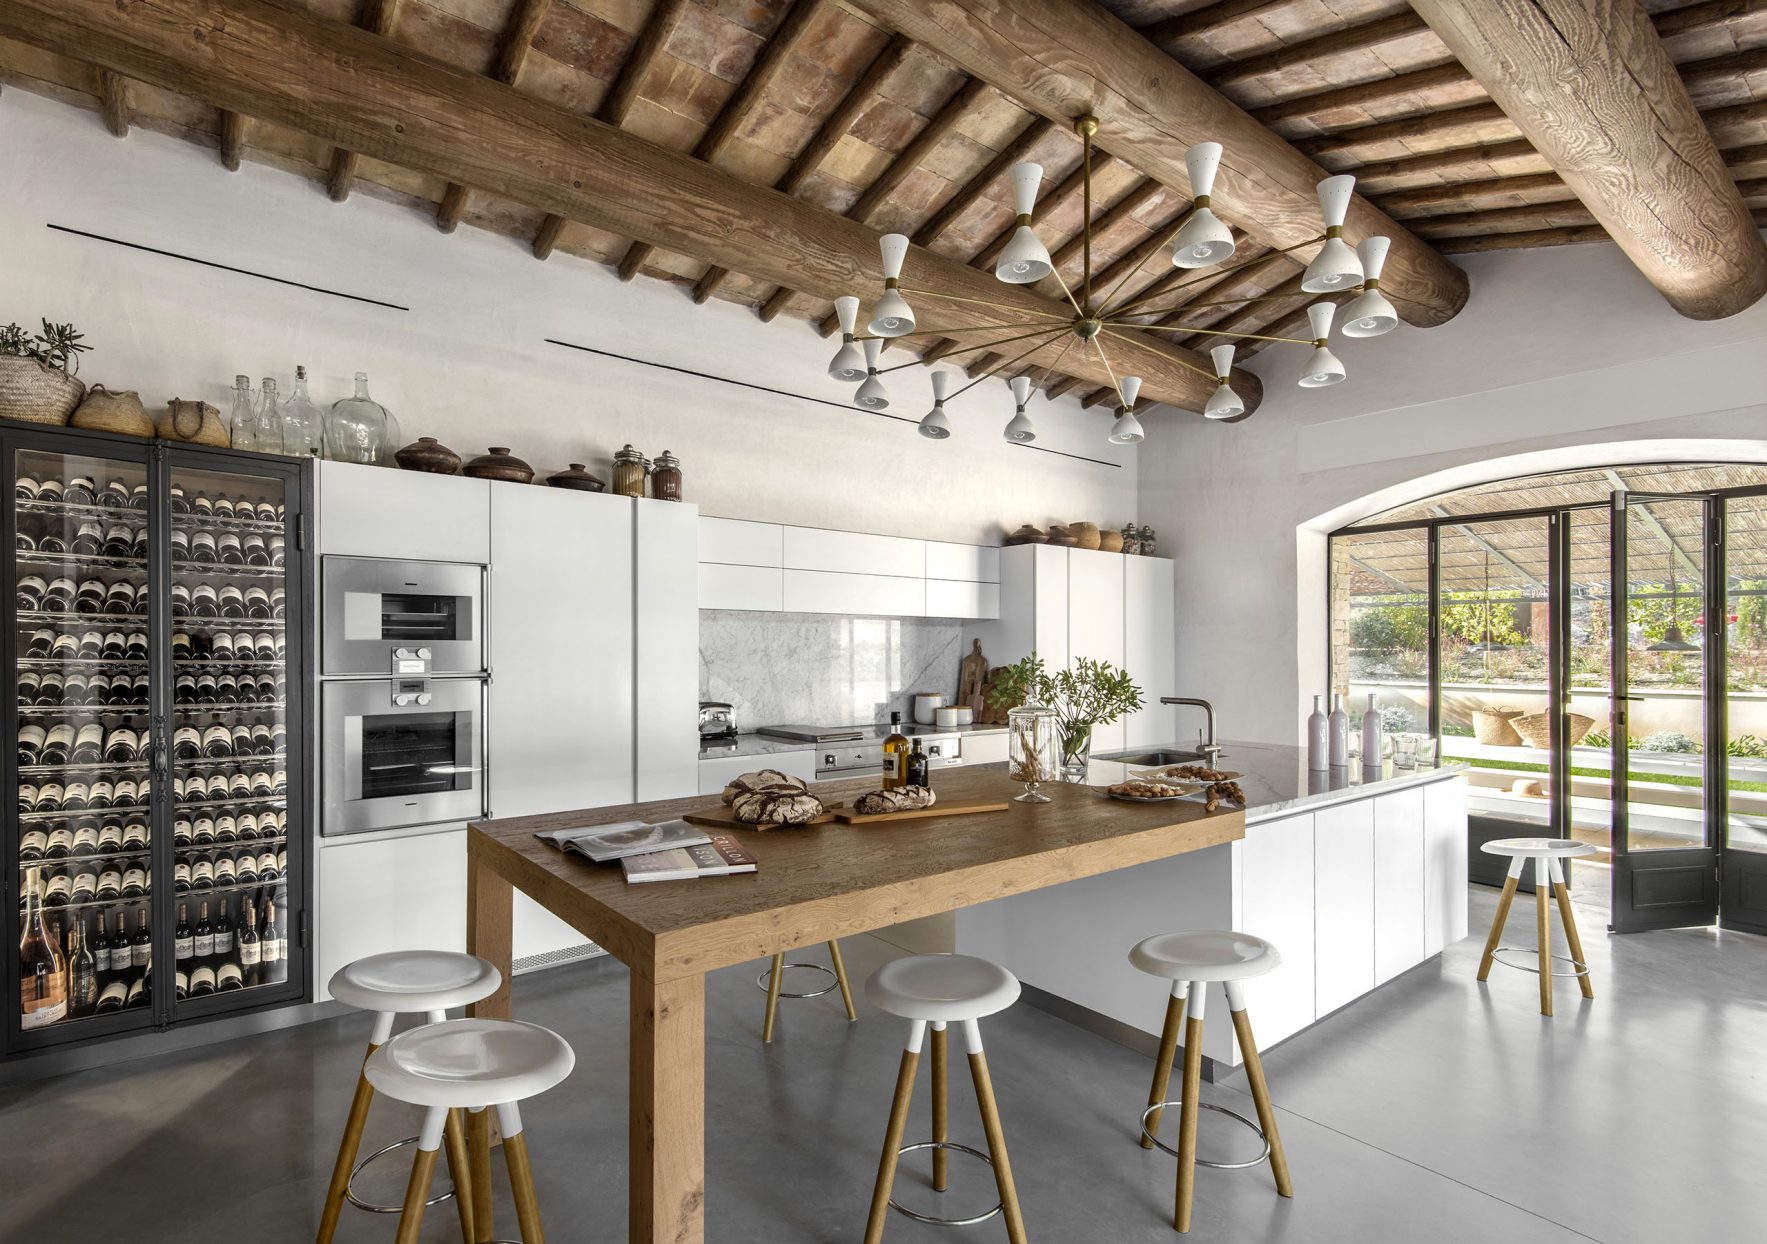 A well-balanced contemporary kitchen created through custom renovation.